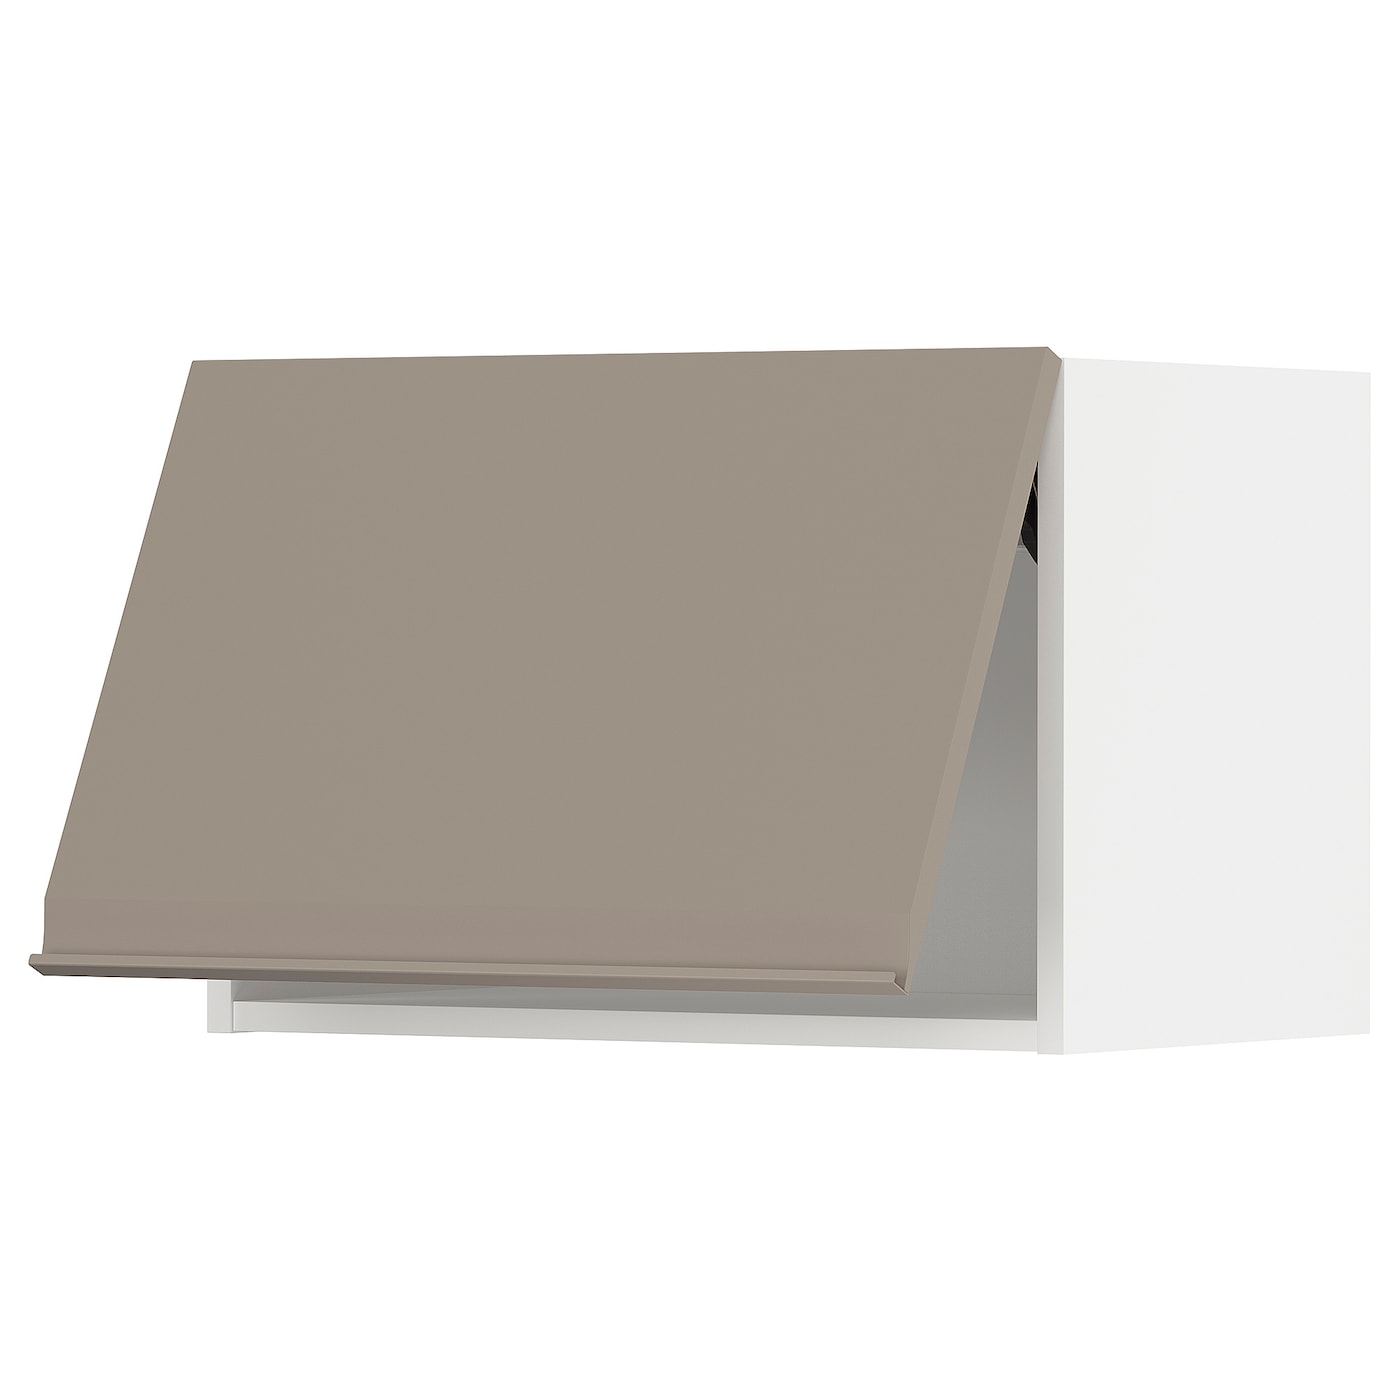 Навесной шкаф - METOD IKEA/ МЕТОД ИКЕА, 40х60 см,  белый/светло-коричневый